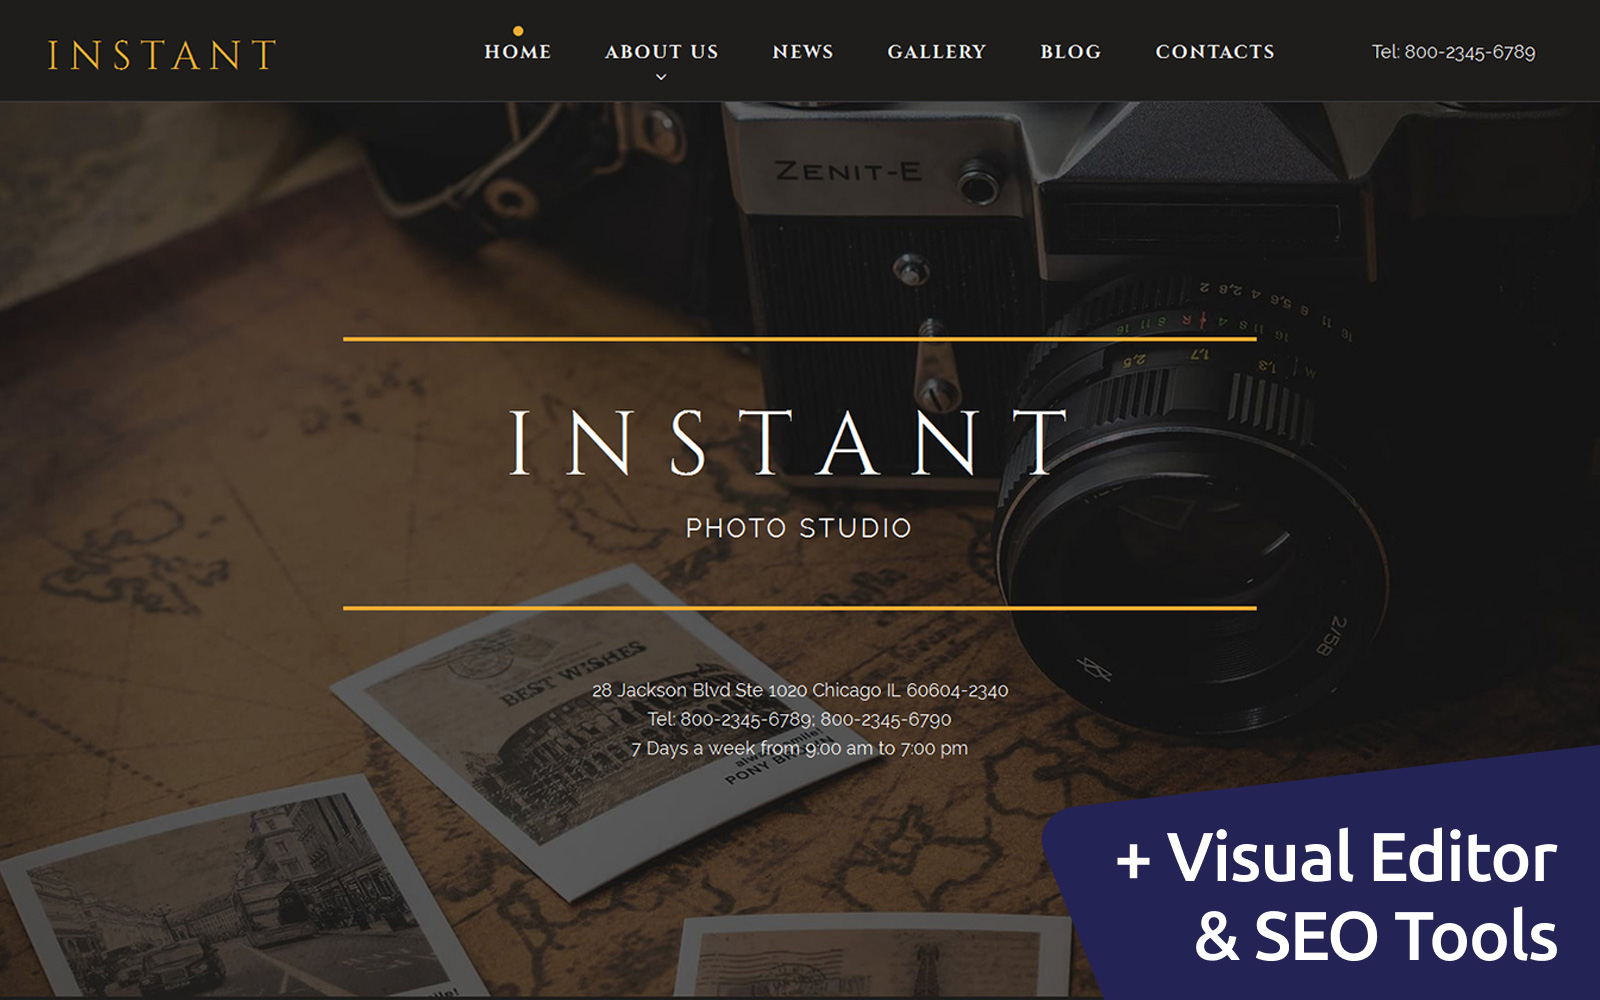 INSTANT - Photo Studio Photo Gallery Website Powered by MotoCMS 3 Website Builder